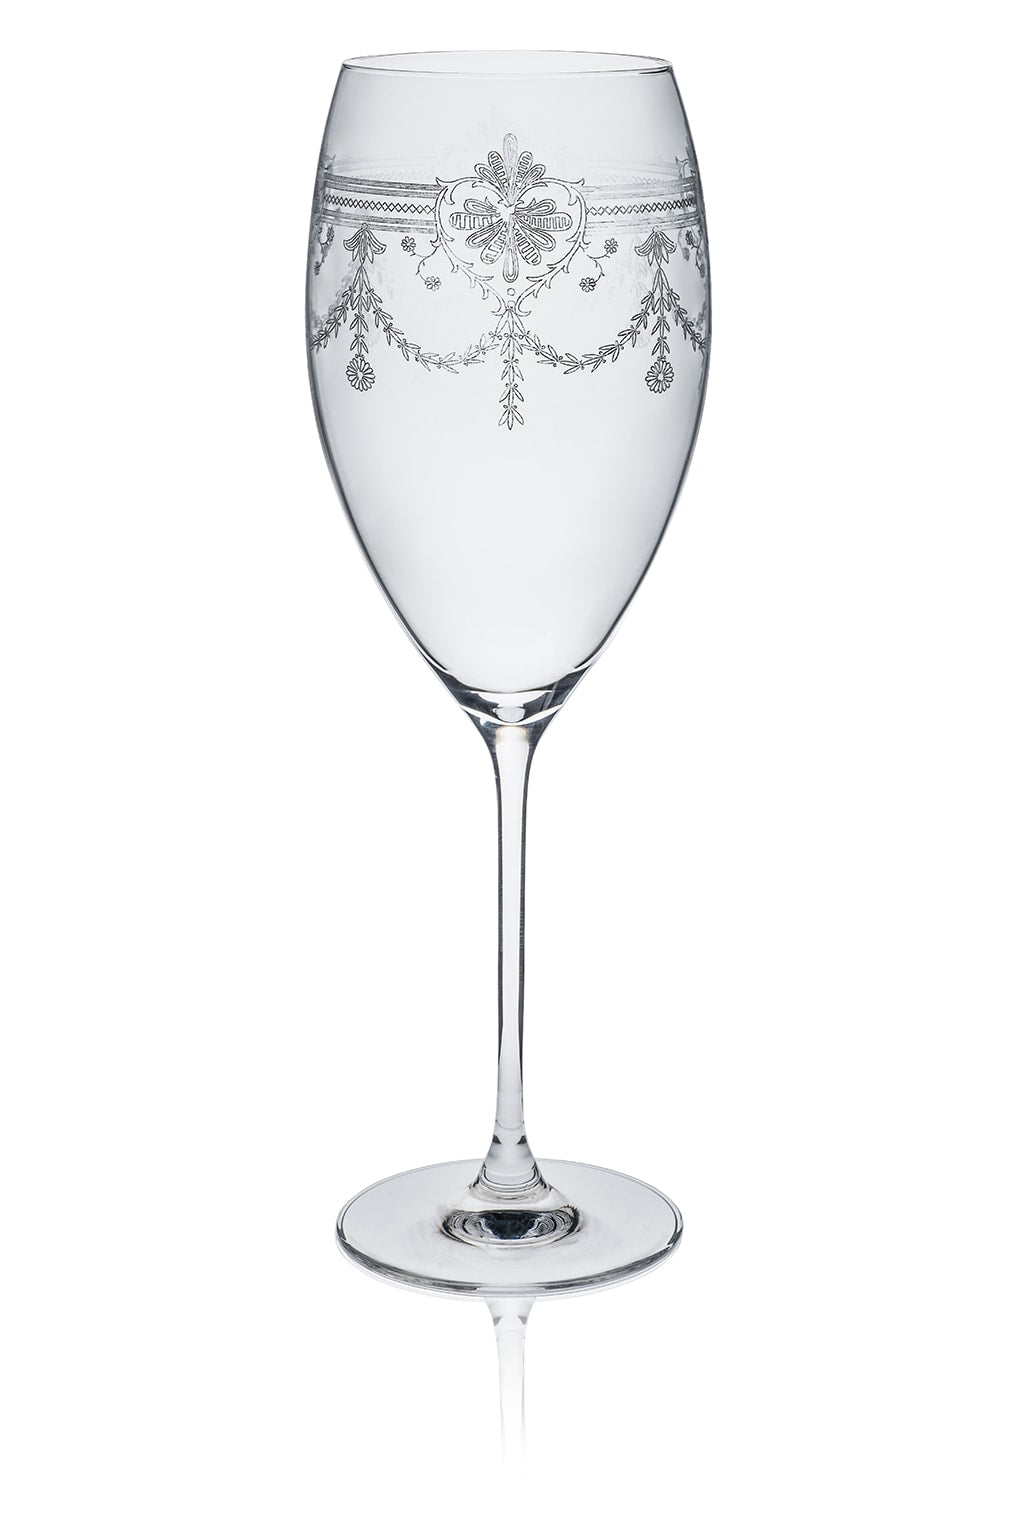 Grace Victorian Rustic Tall Wine Glasses - Set of 6